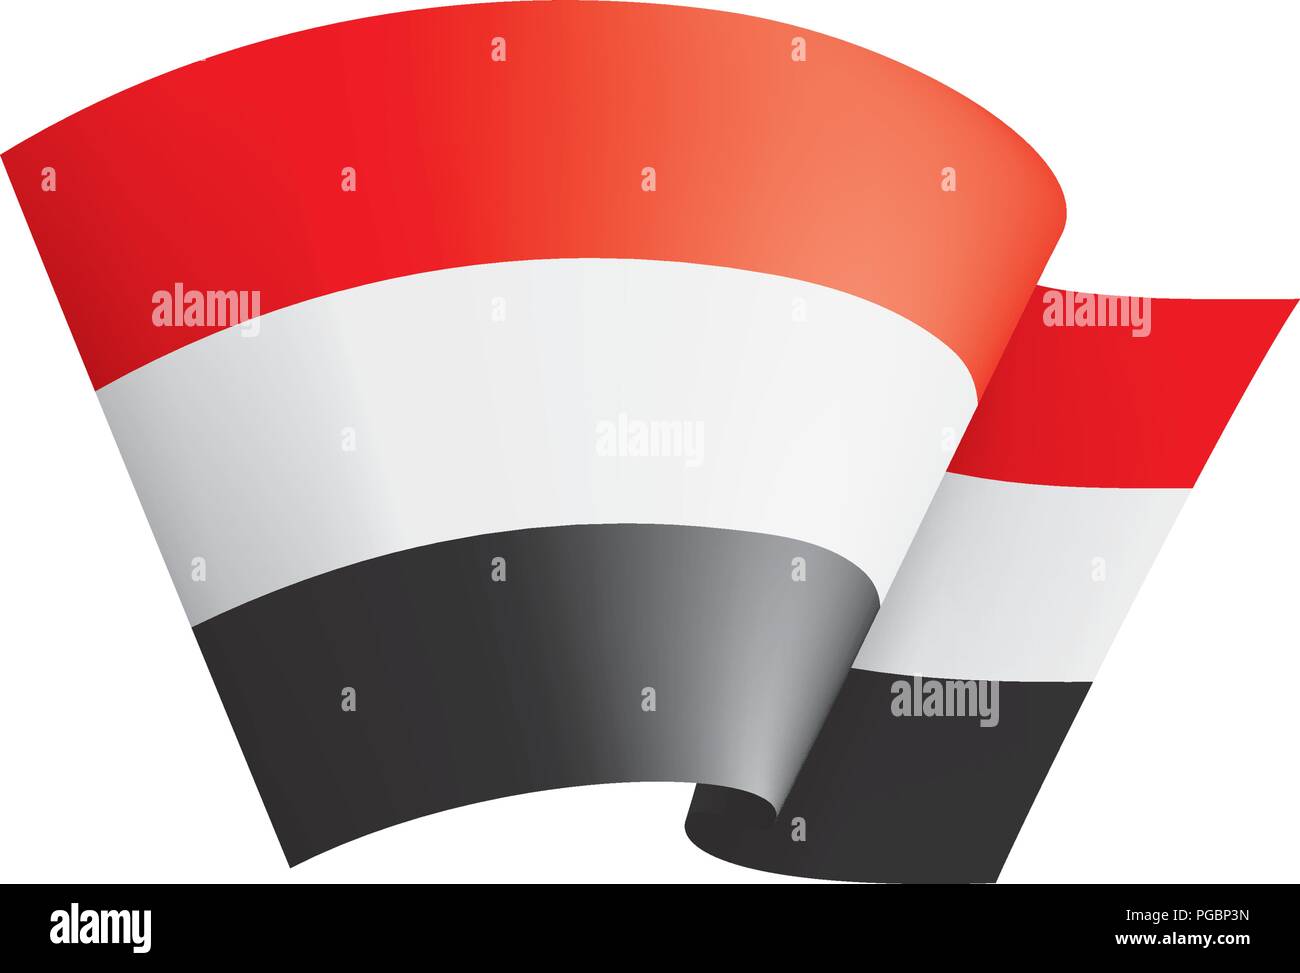 Yemeni Flag Vector Illustration On A White Background Stock Vector Image And Art Alamy 